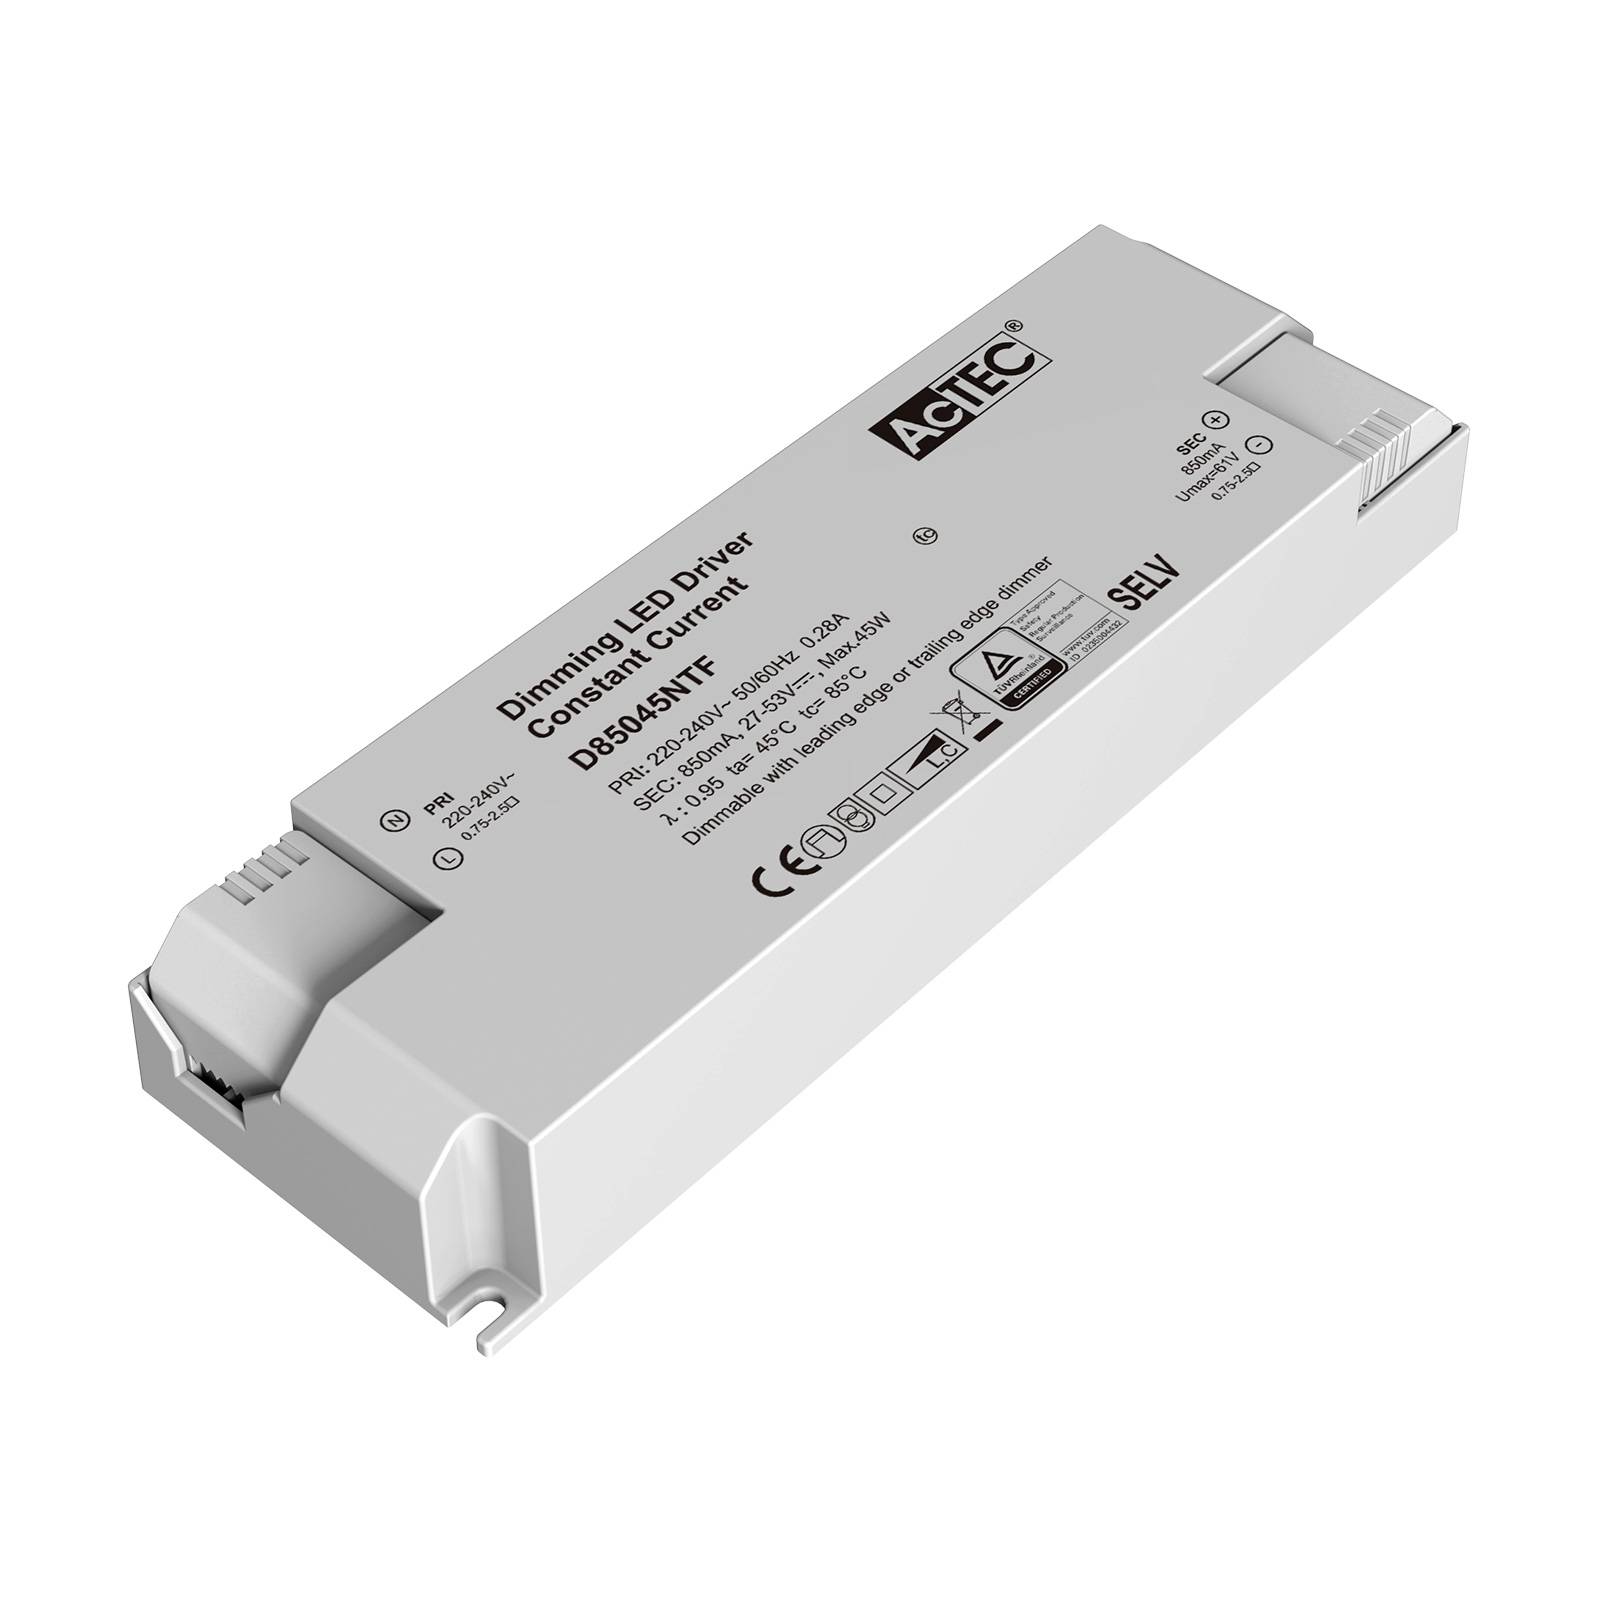 AcTEC Triac LED-Treiber CC max. 45W 850mA